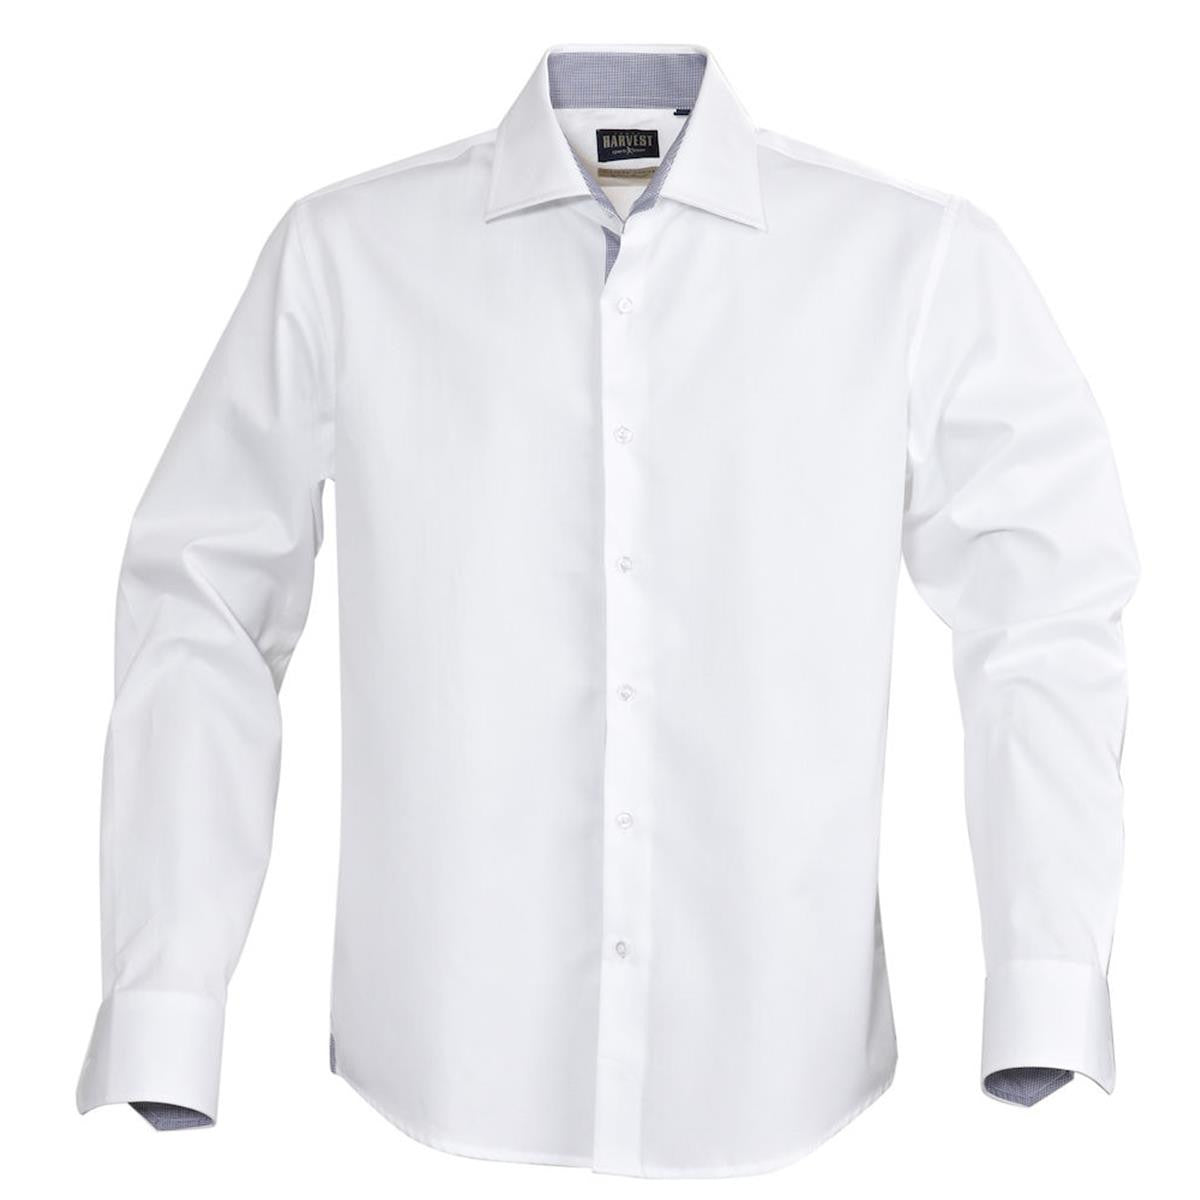 Baltimore Men's 100% Cotton Long Sleeve Shirt